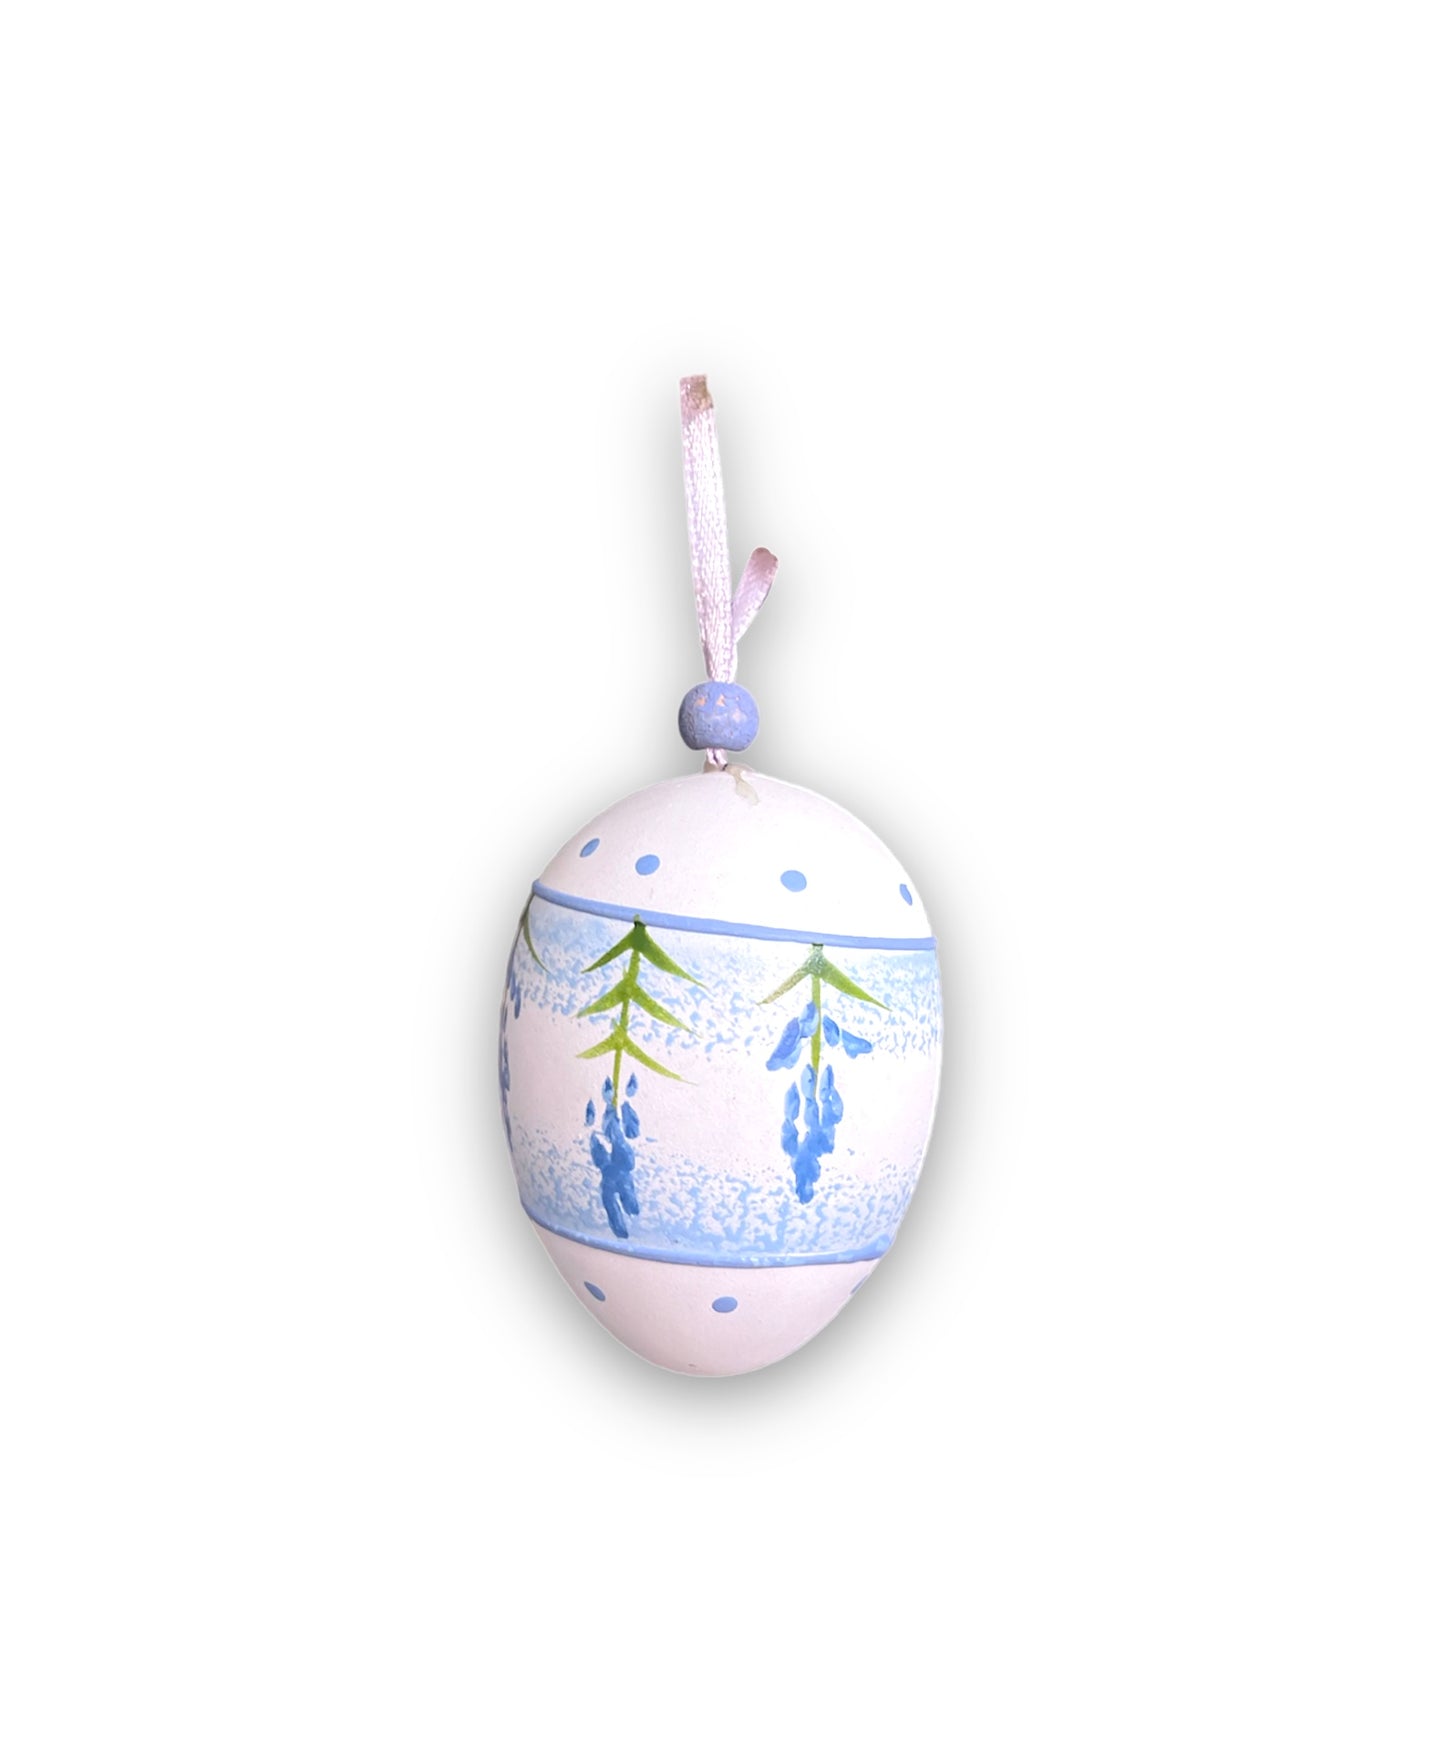 Painted pendant egg decoration